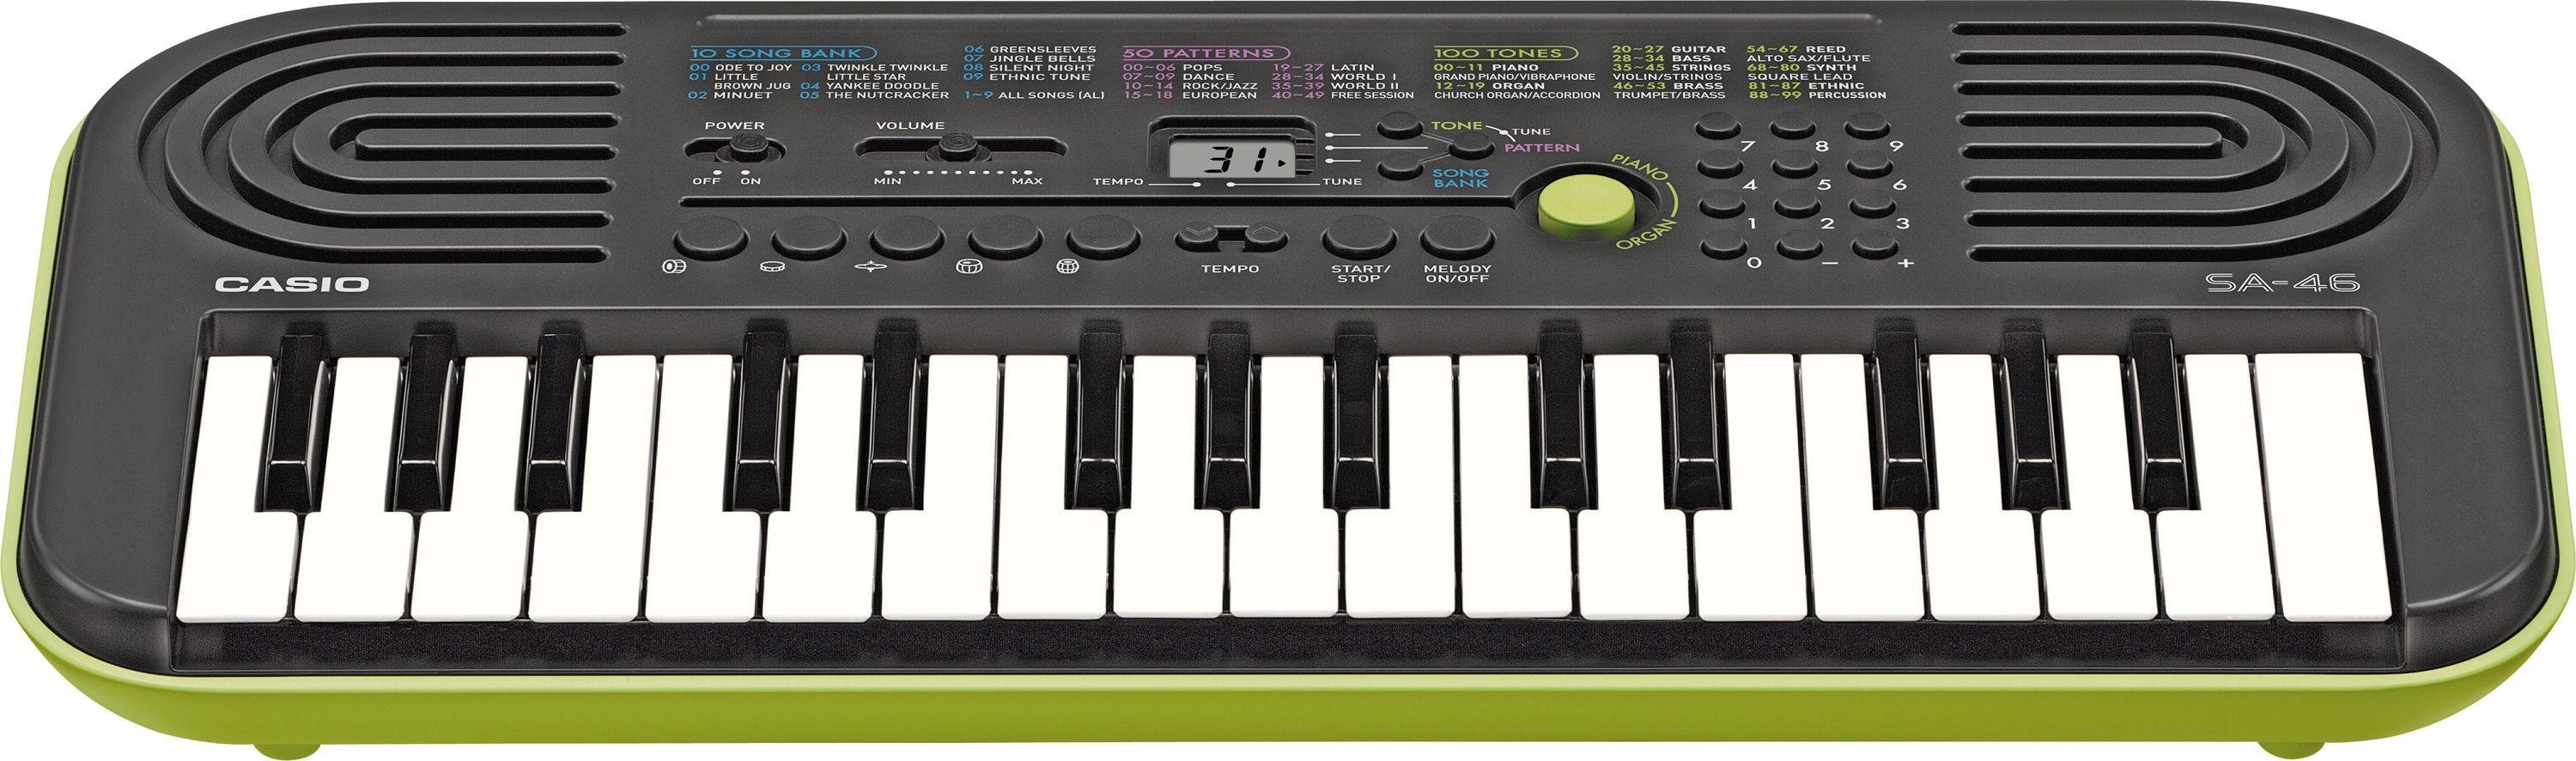 Casio SA-46 Mini Keyboard - Lime Green